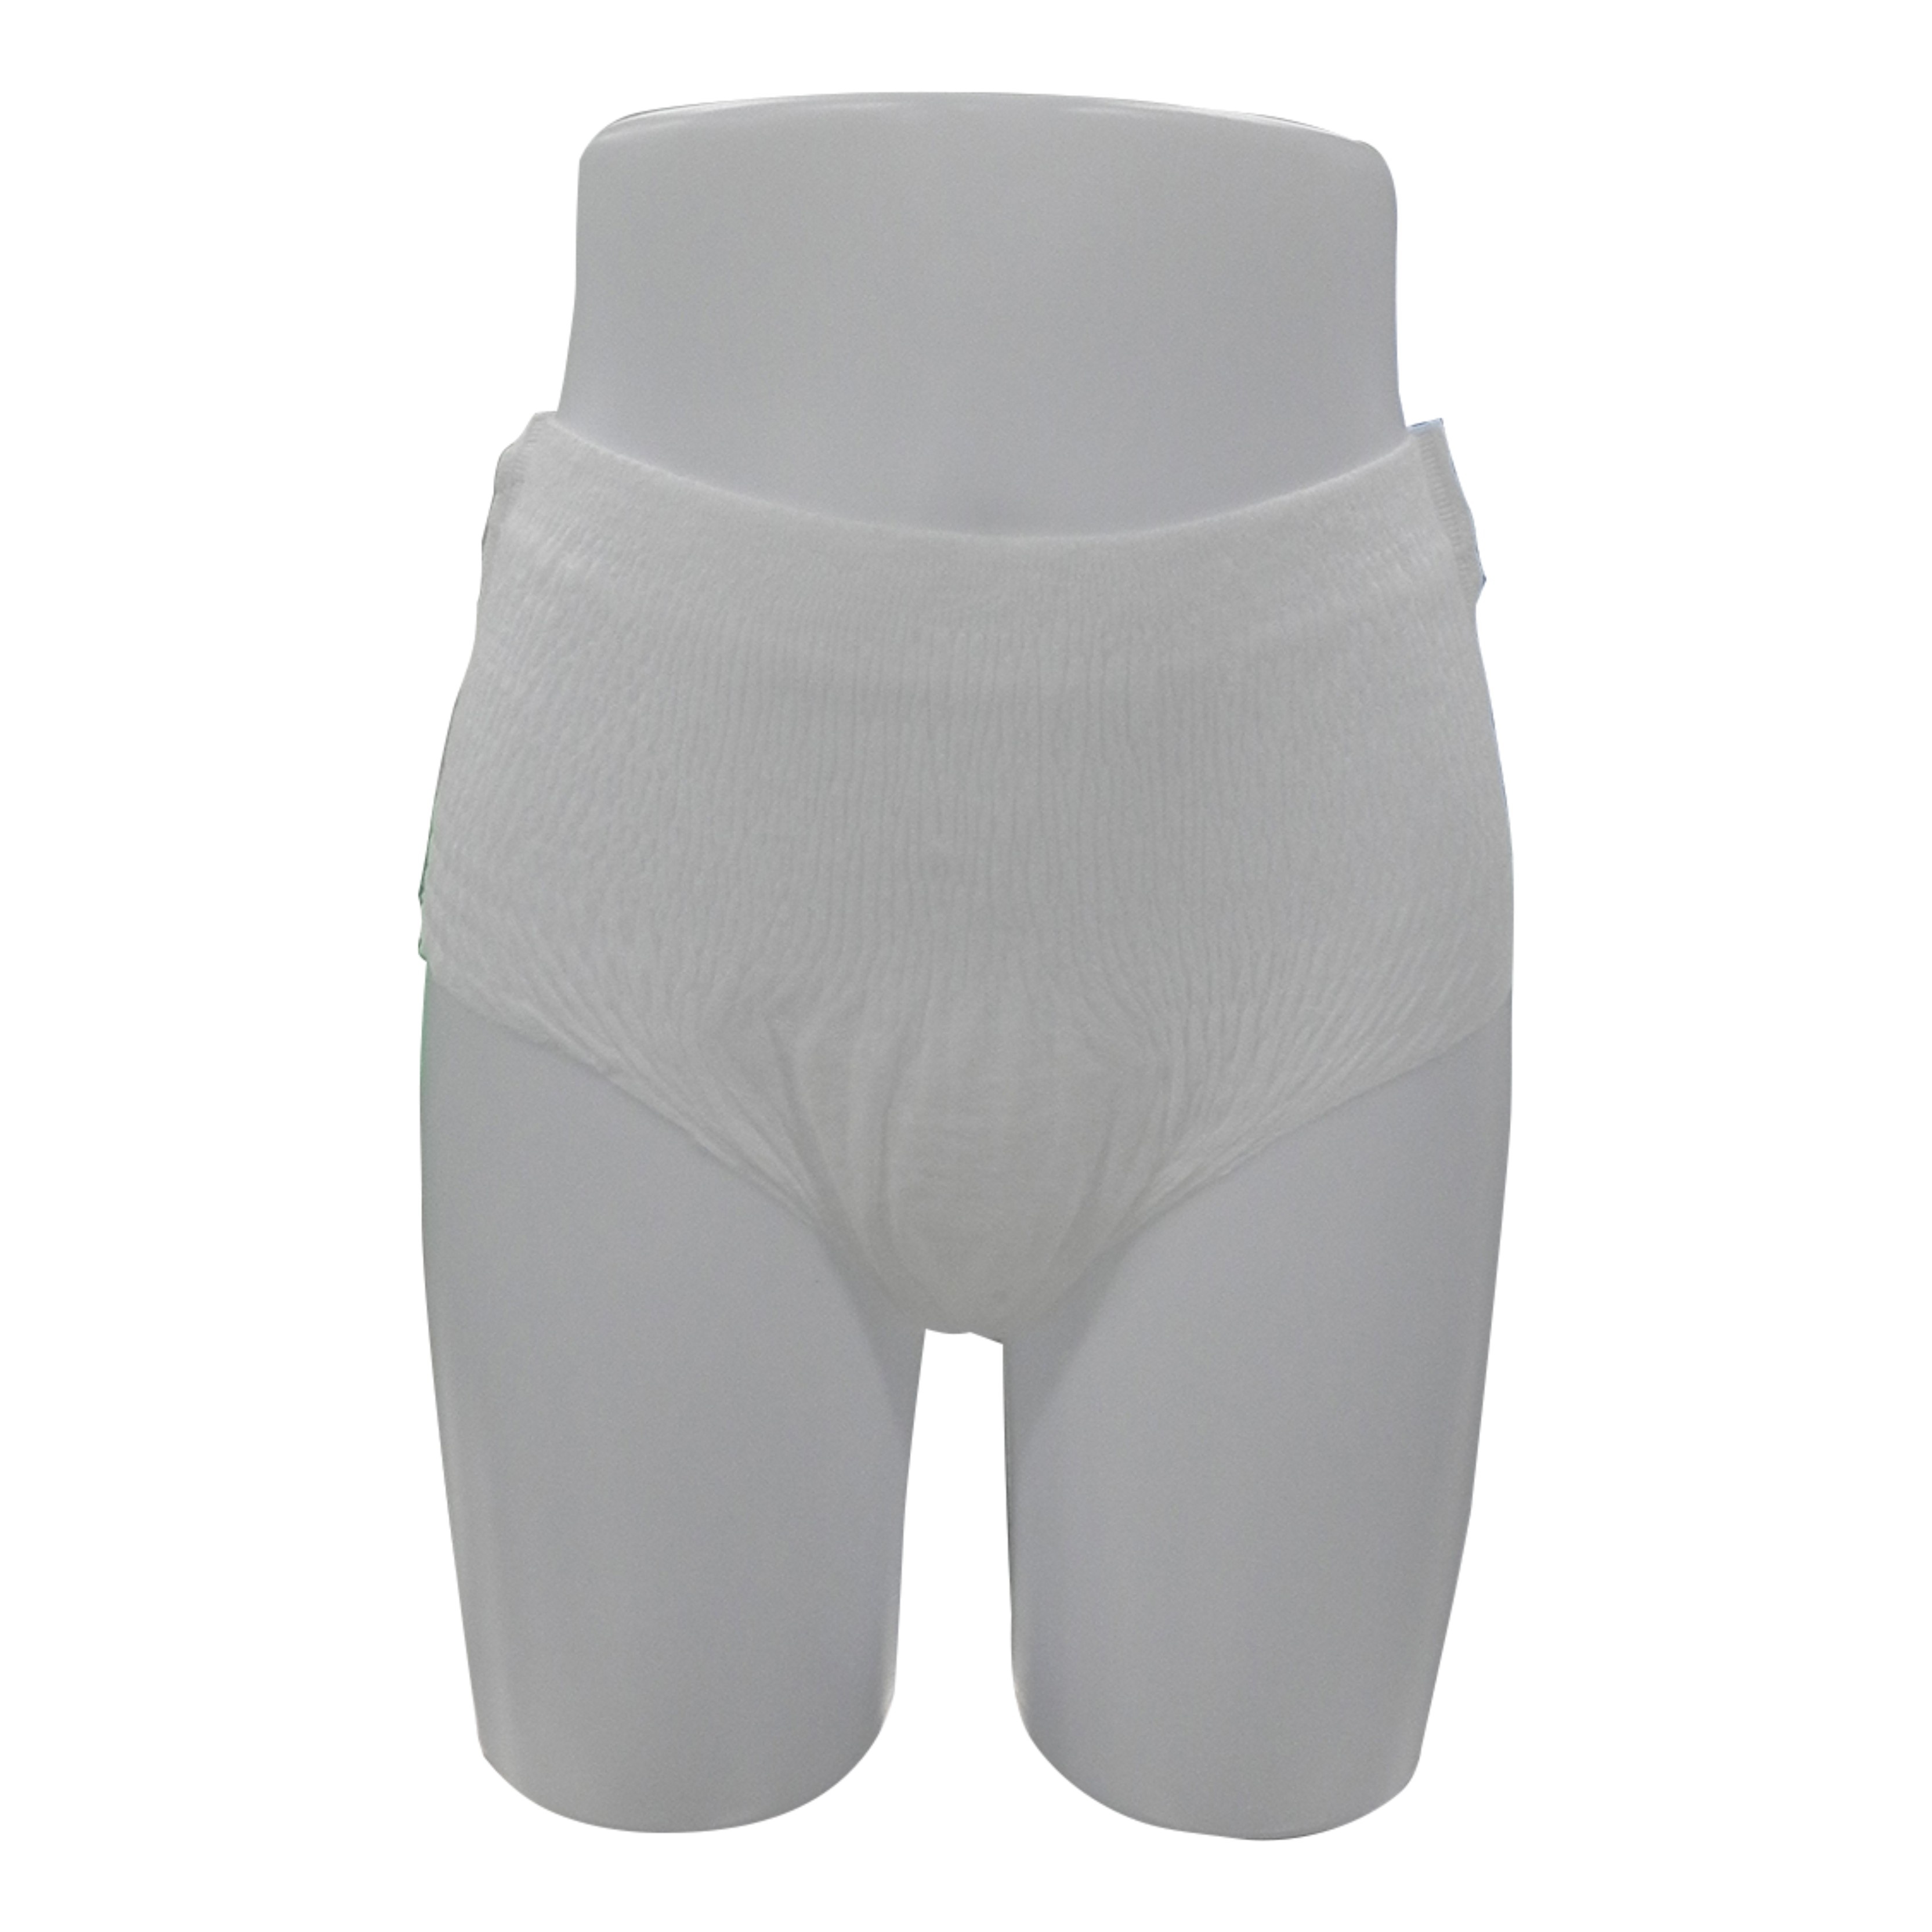 High Quality Incontinence Pants On Amazon - Large Incontinence Pants – Yoho